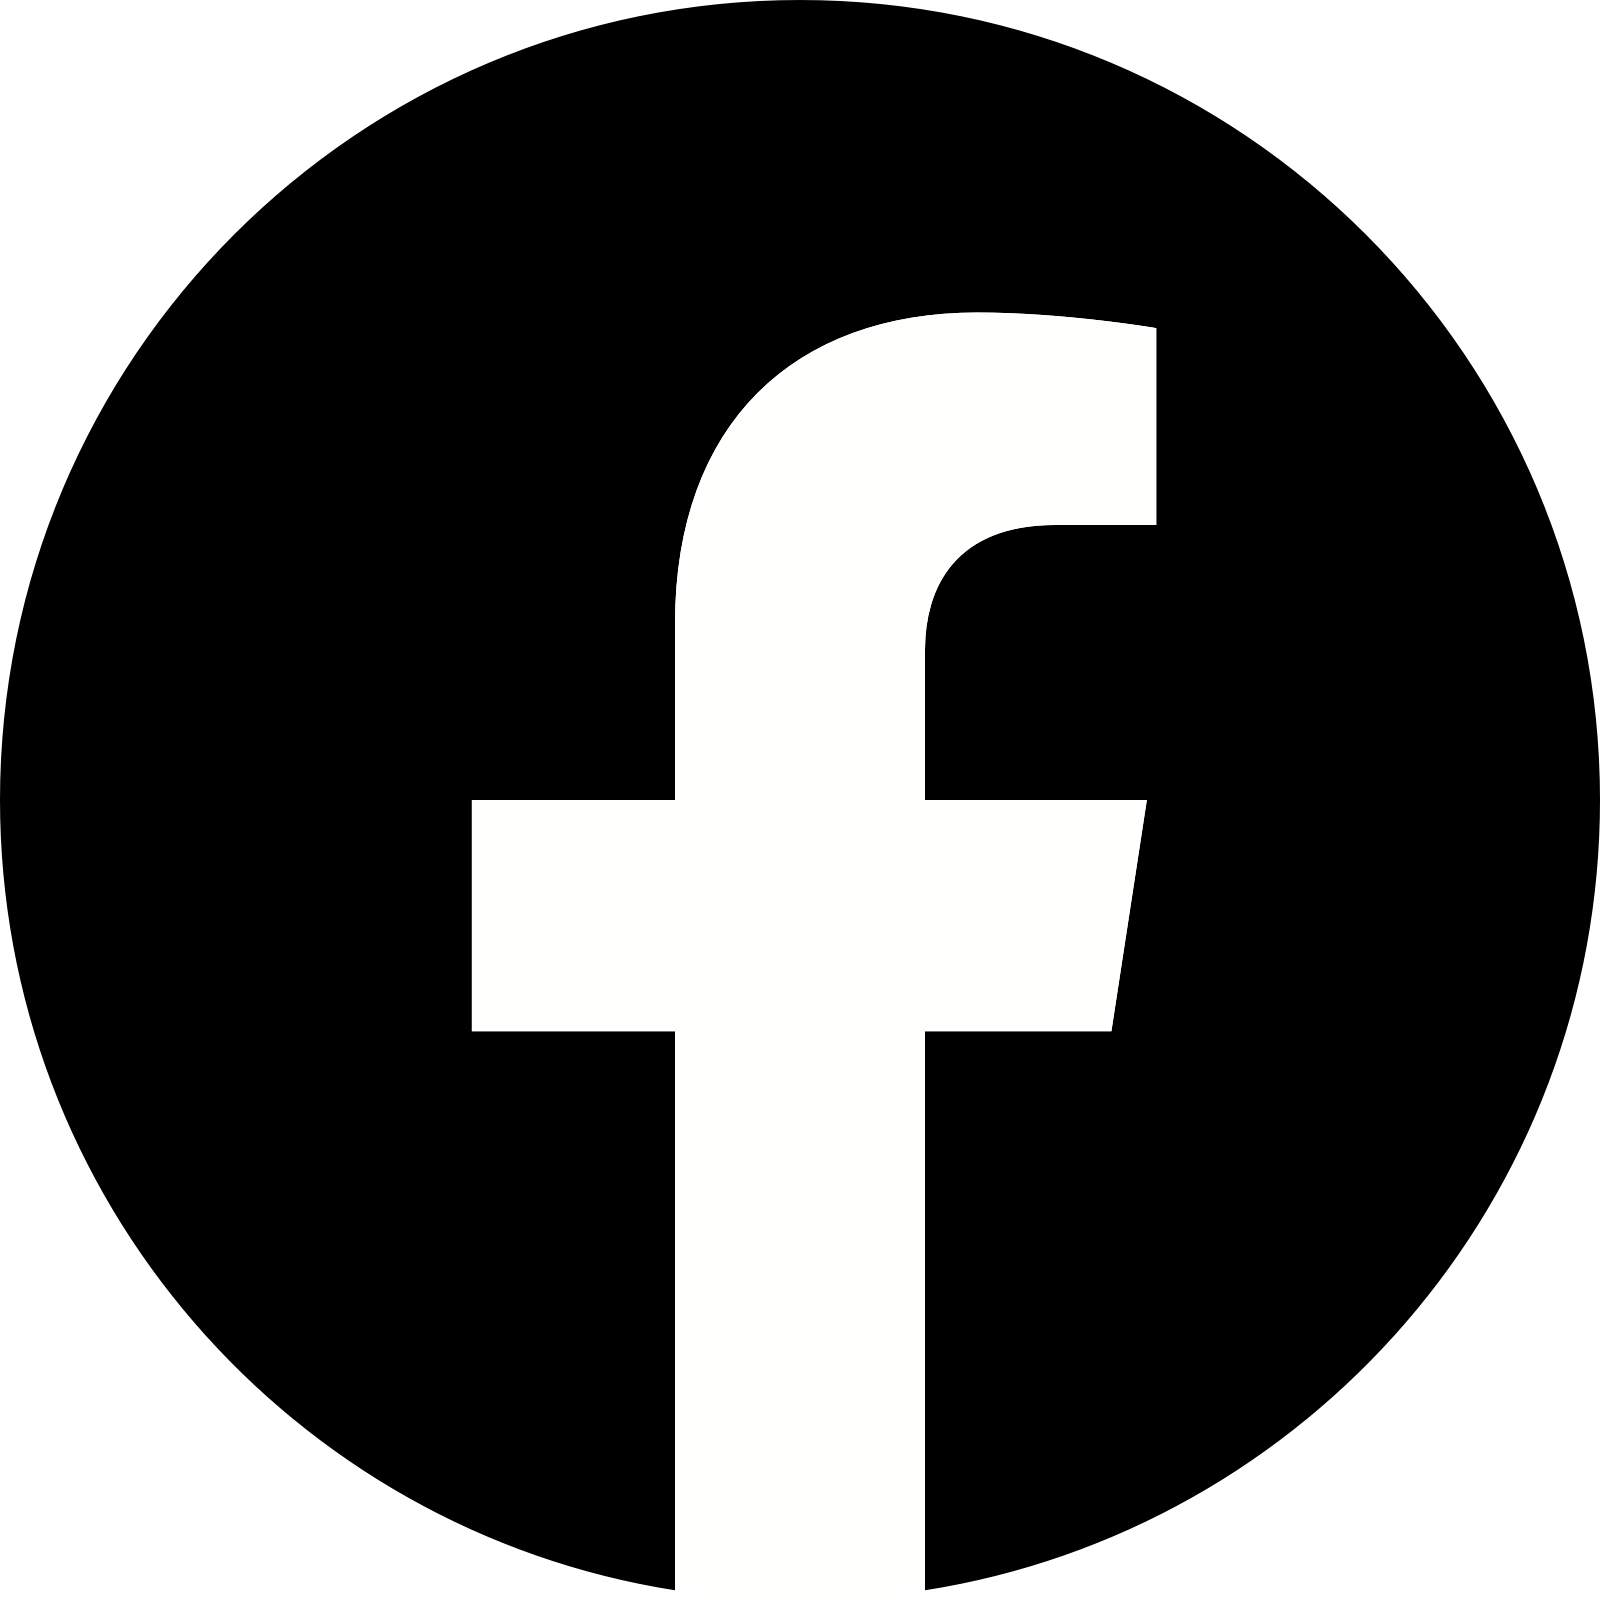 Facebook-logo Transparante Afbeeldingen